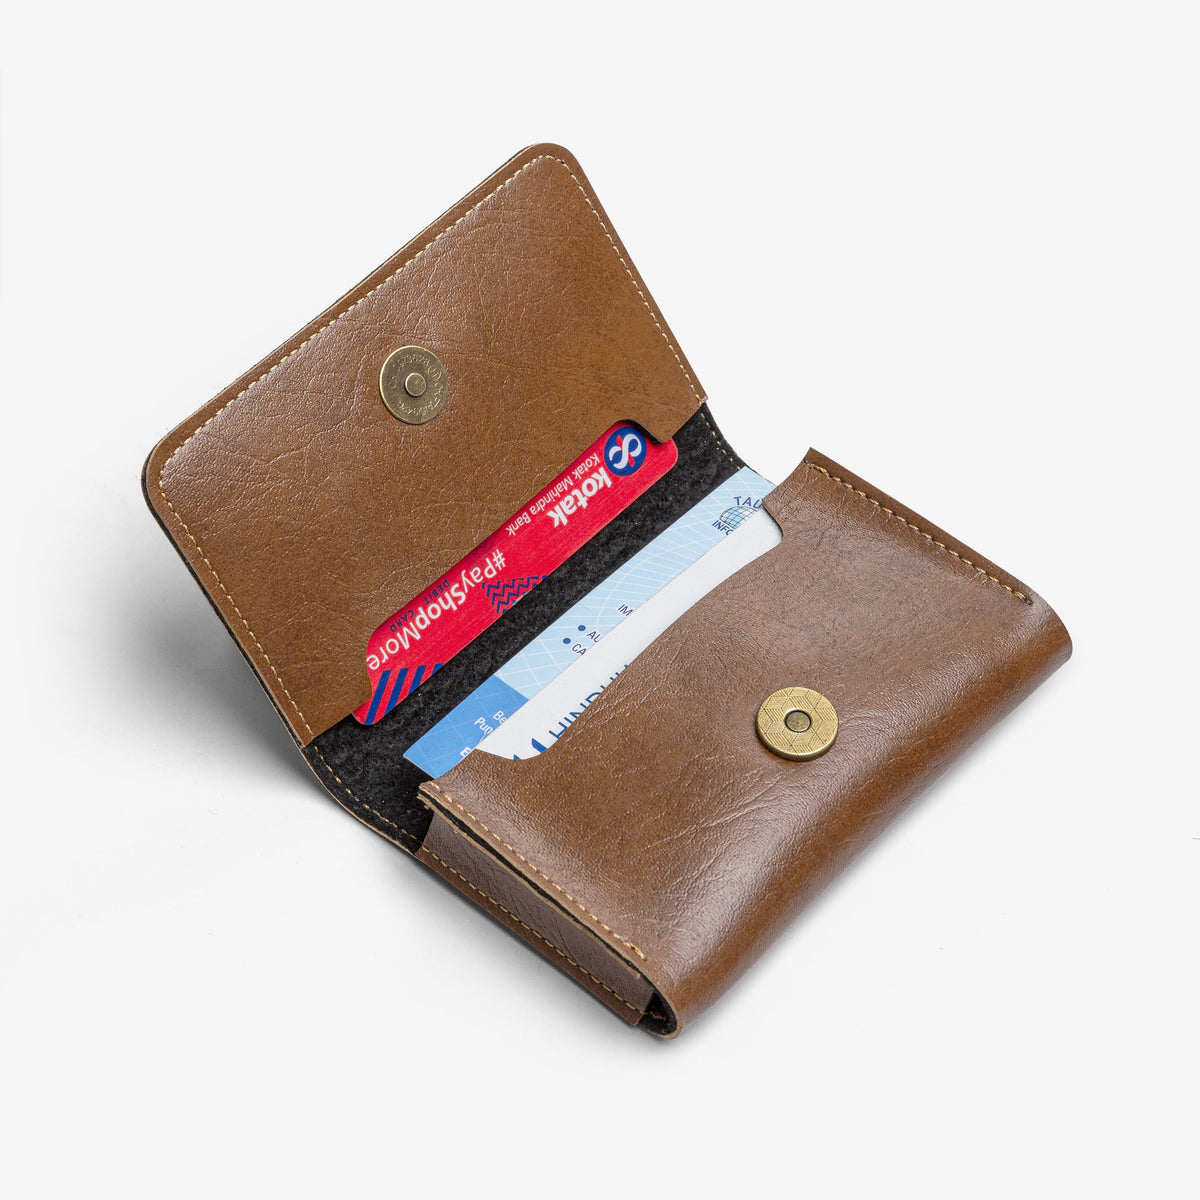 The Messy Corner Card Holder Business Card Holder/Wallet - Tan